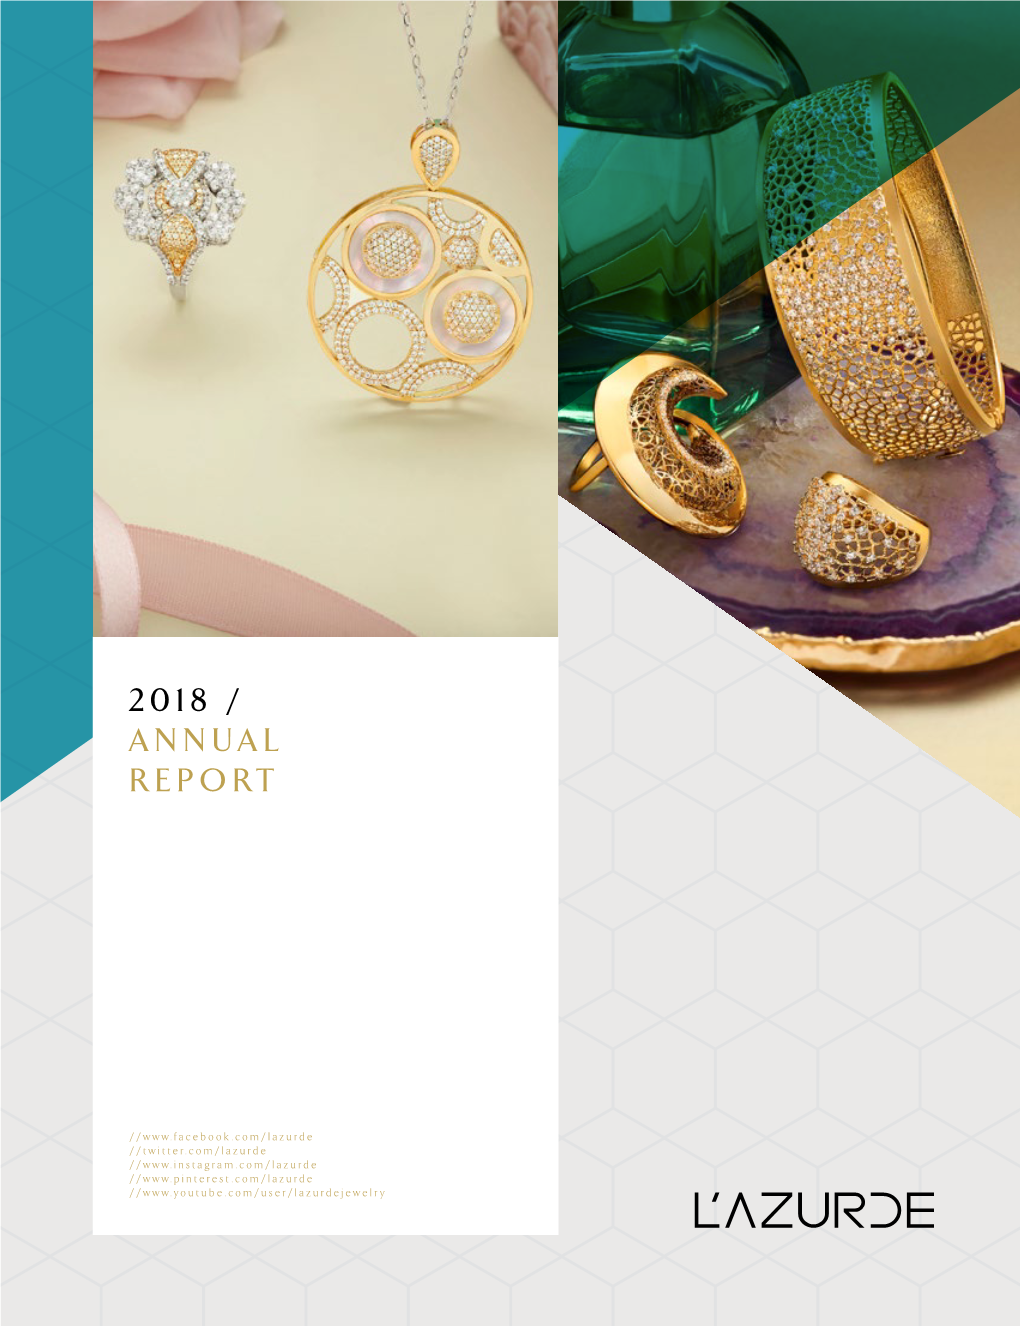 2018 / Annual Report